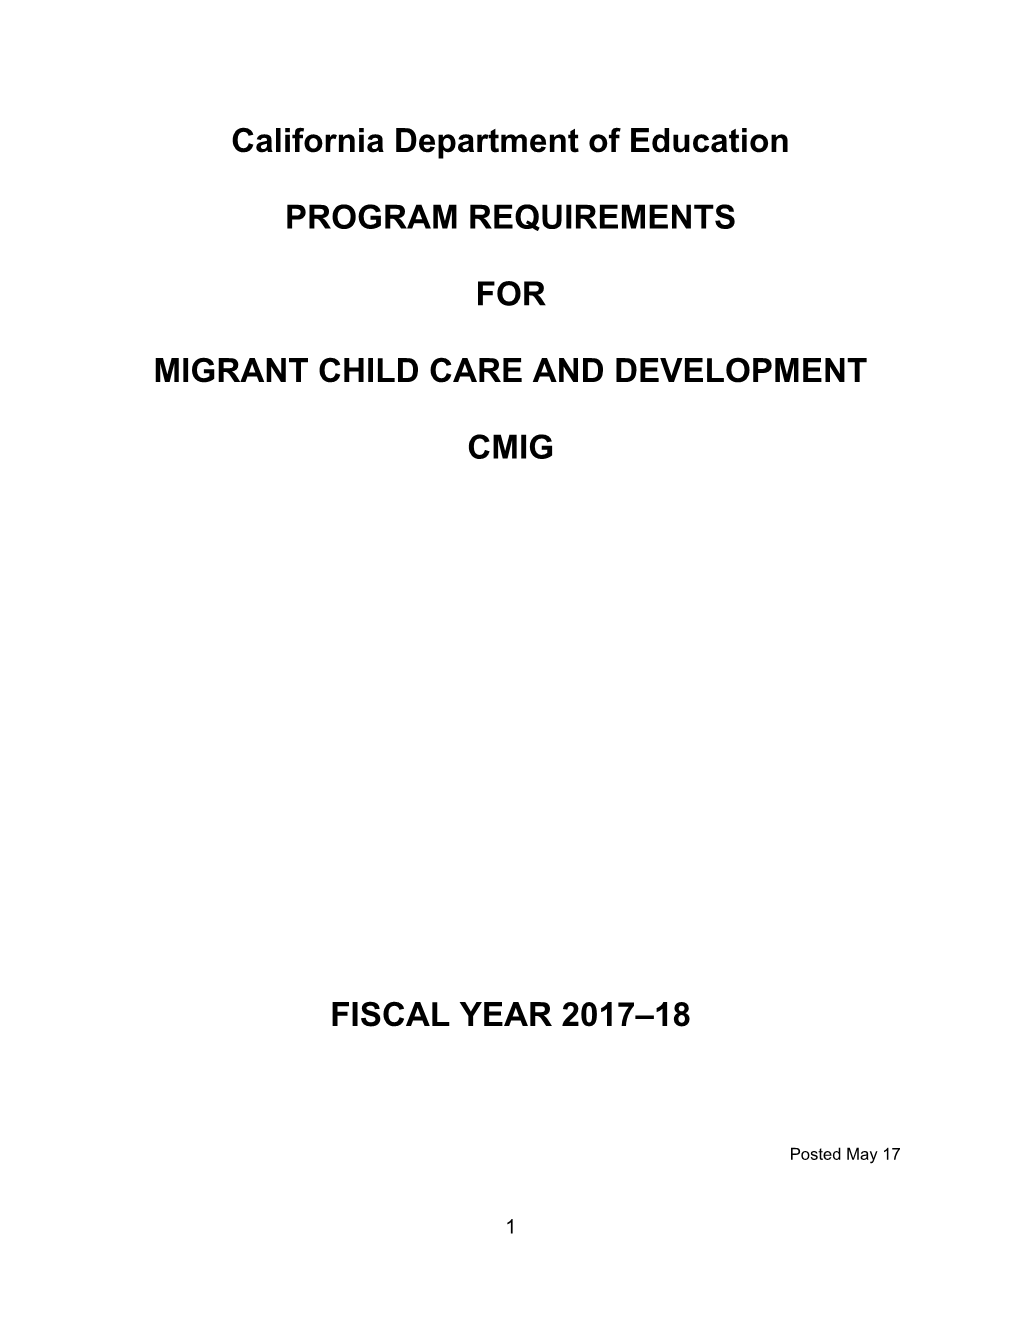 2017-18 CMIG Migrant Program - Child Development (CA Dept of Education)